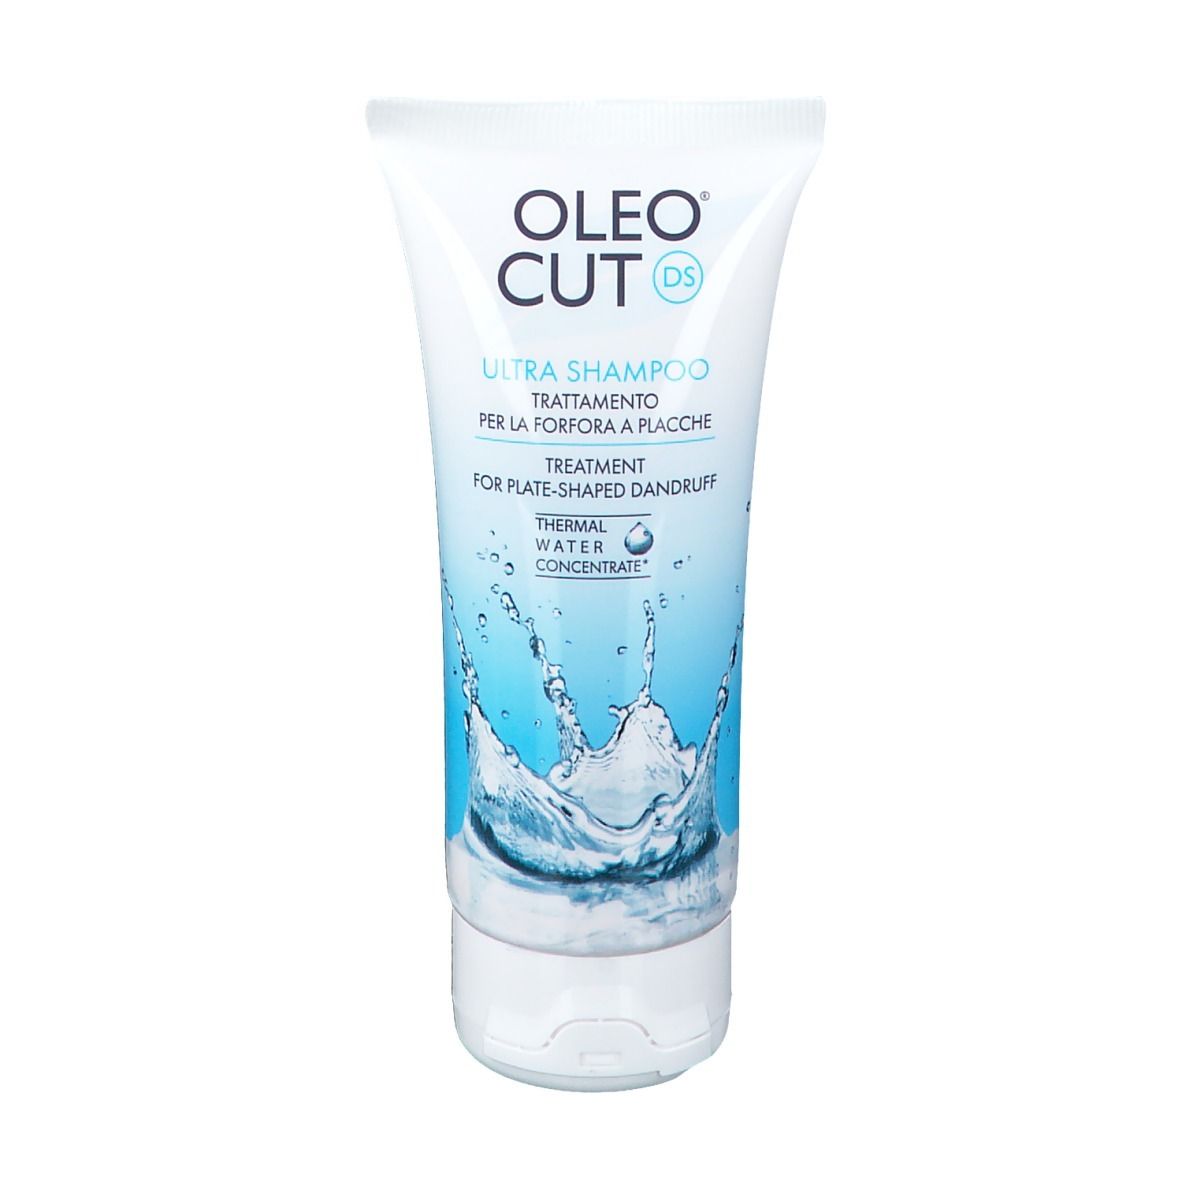 OLEO® CUT Ds Ultra Shampoo